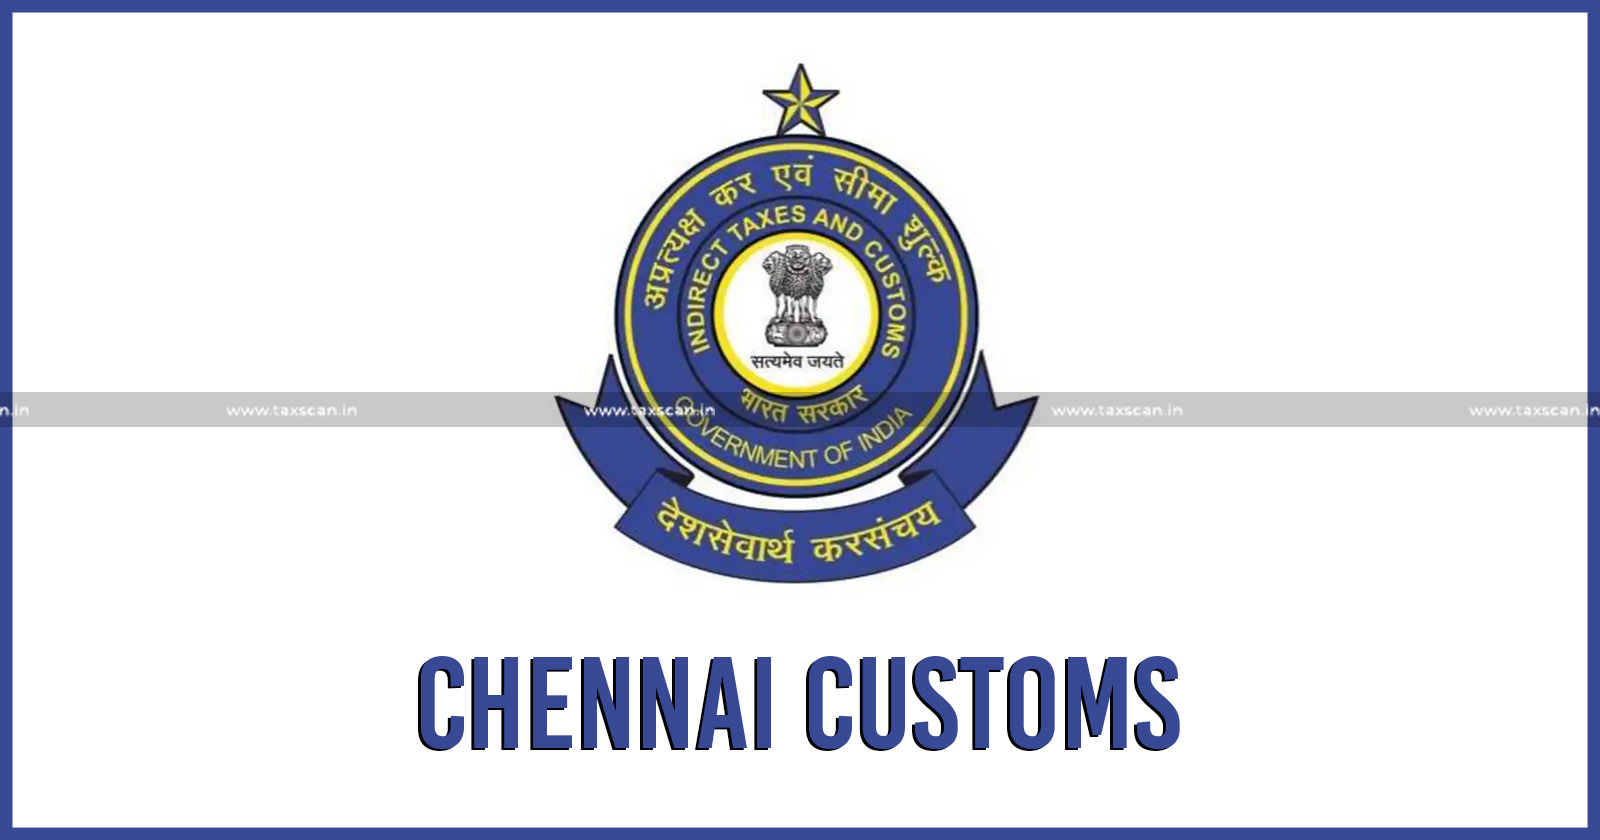 Chennai Customs - Chennai Customs provides Clarification - Chennai Customs provides Clarification on alleged Harassment - taxscan